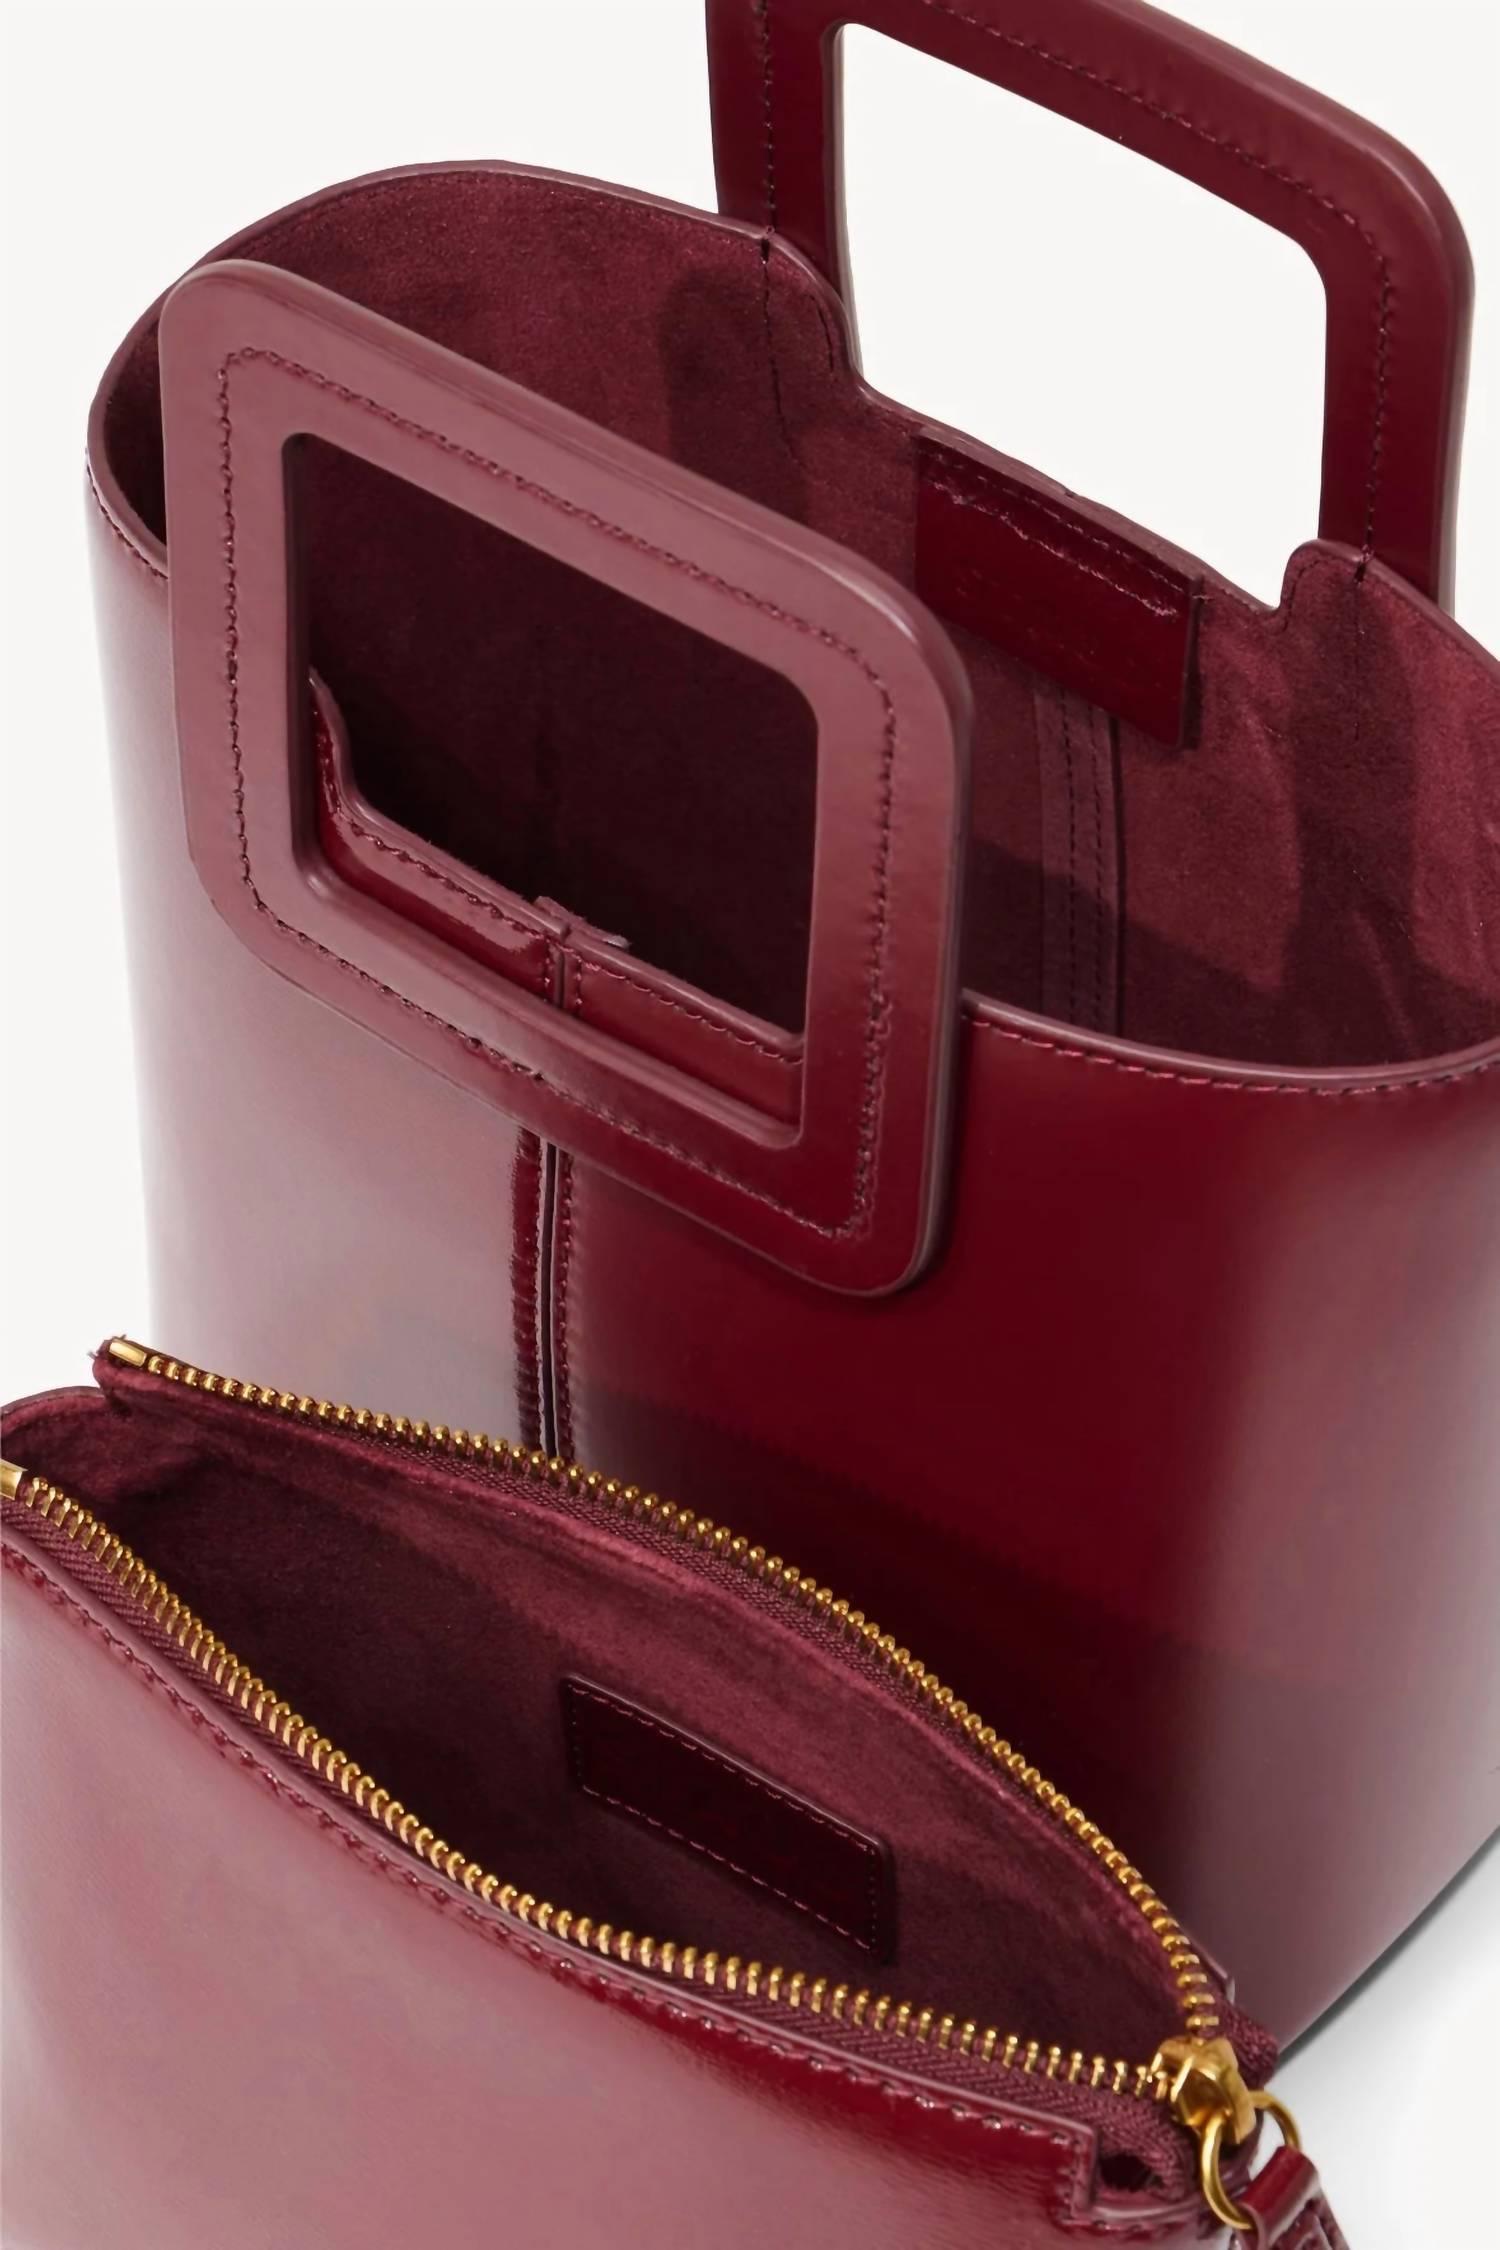 Shirley leather clutch bag